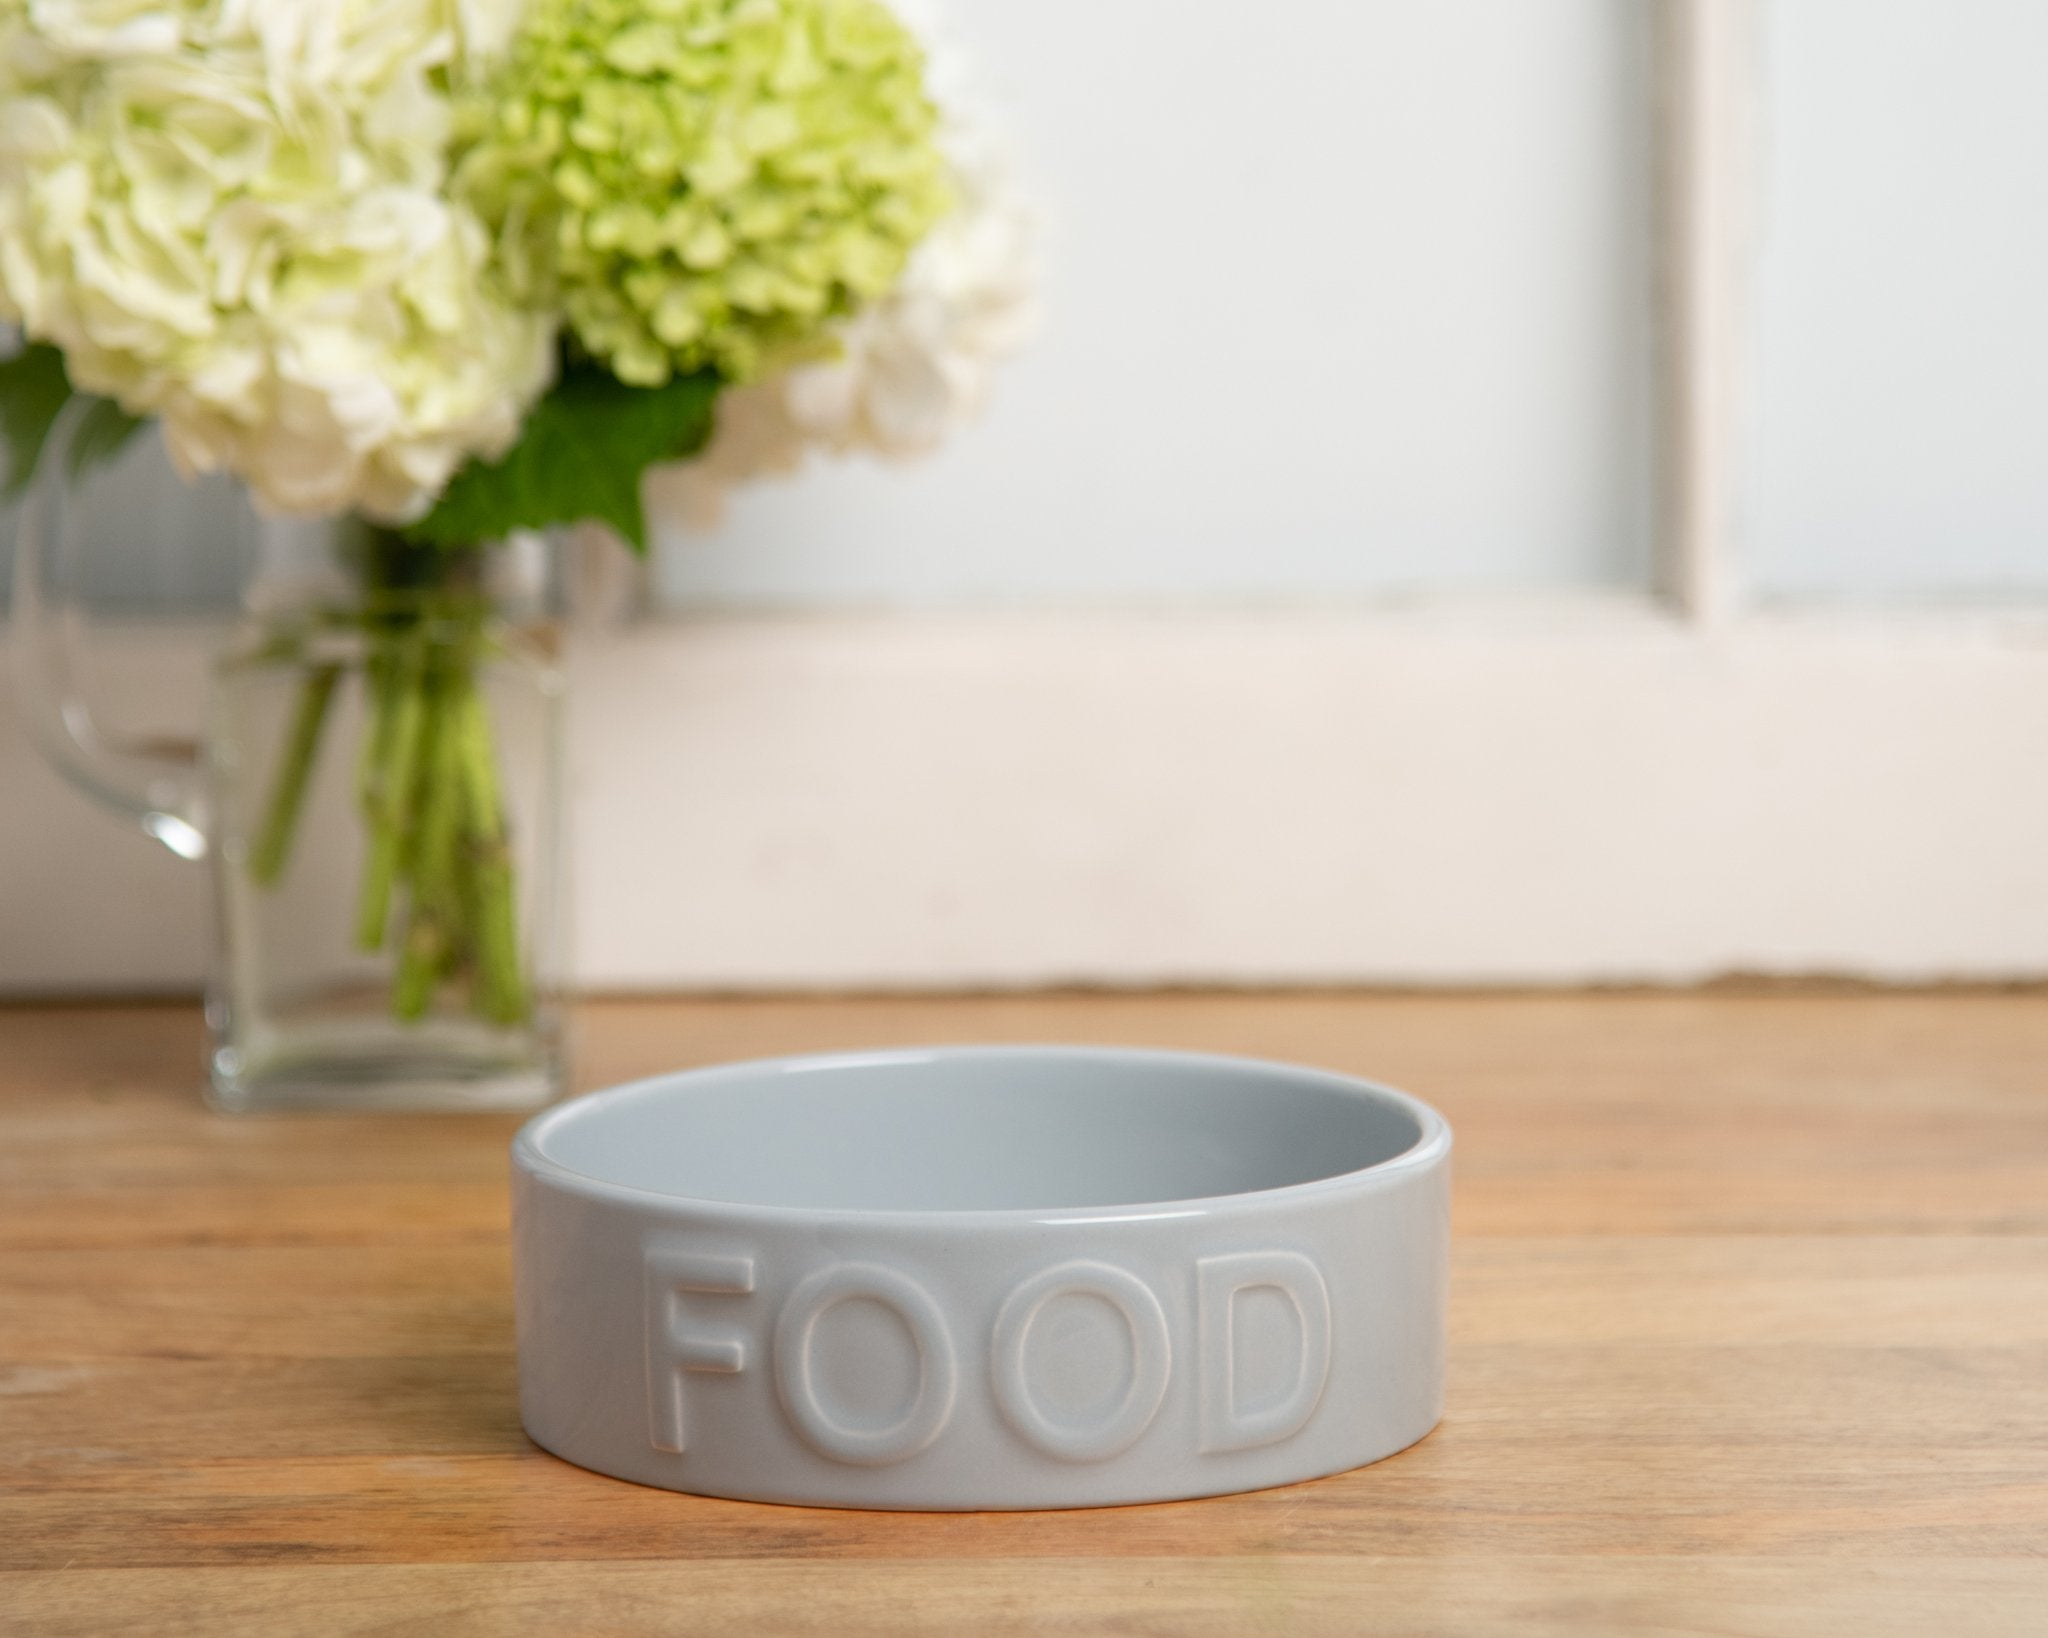 Park Life Designs Classic Food Pet Bowl, Medium Grey